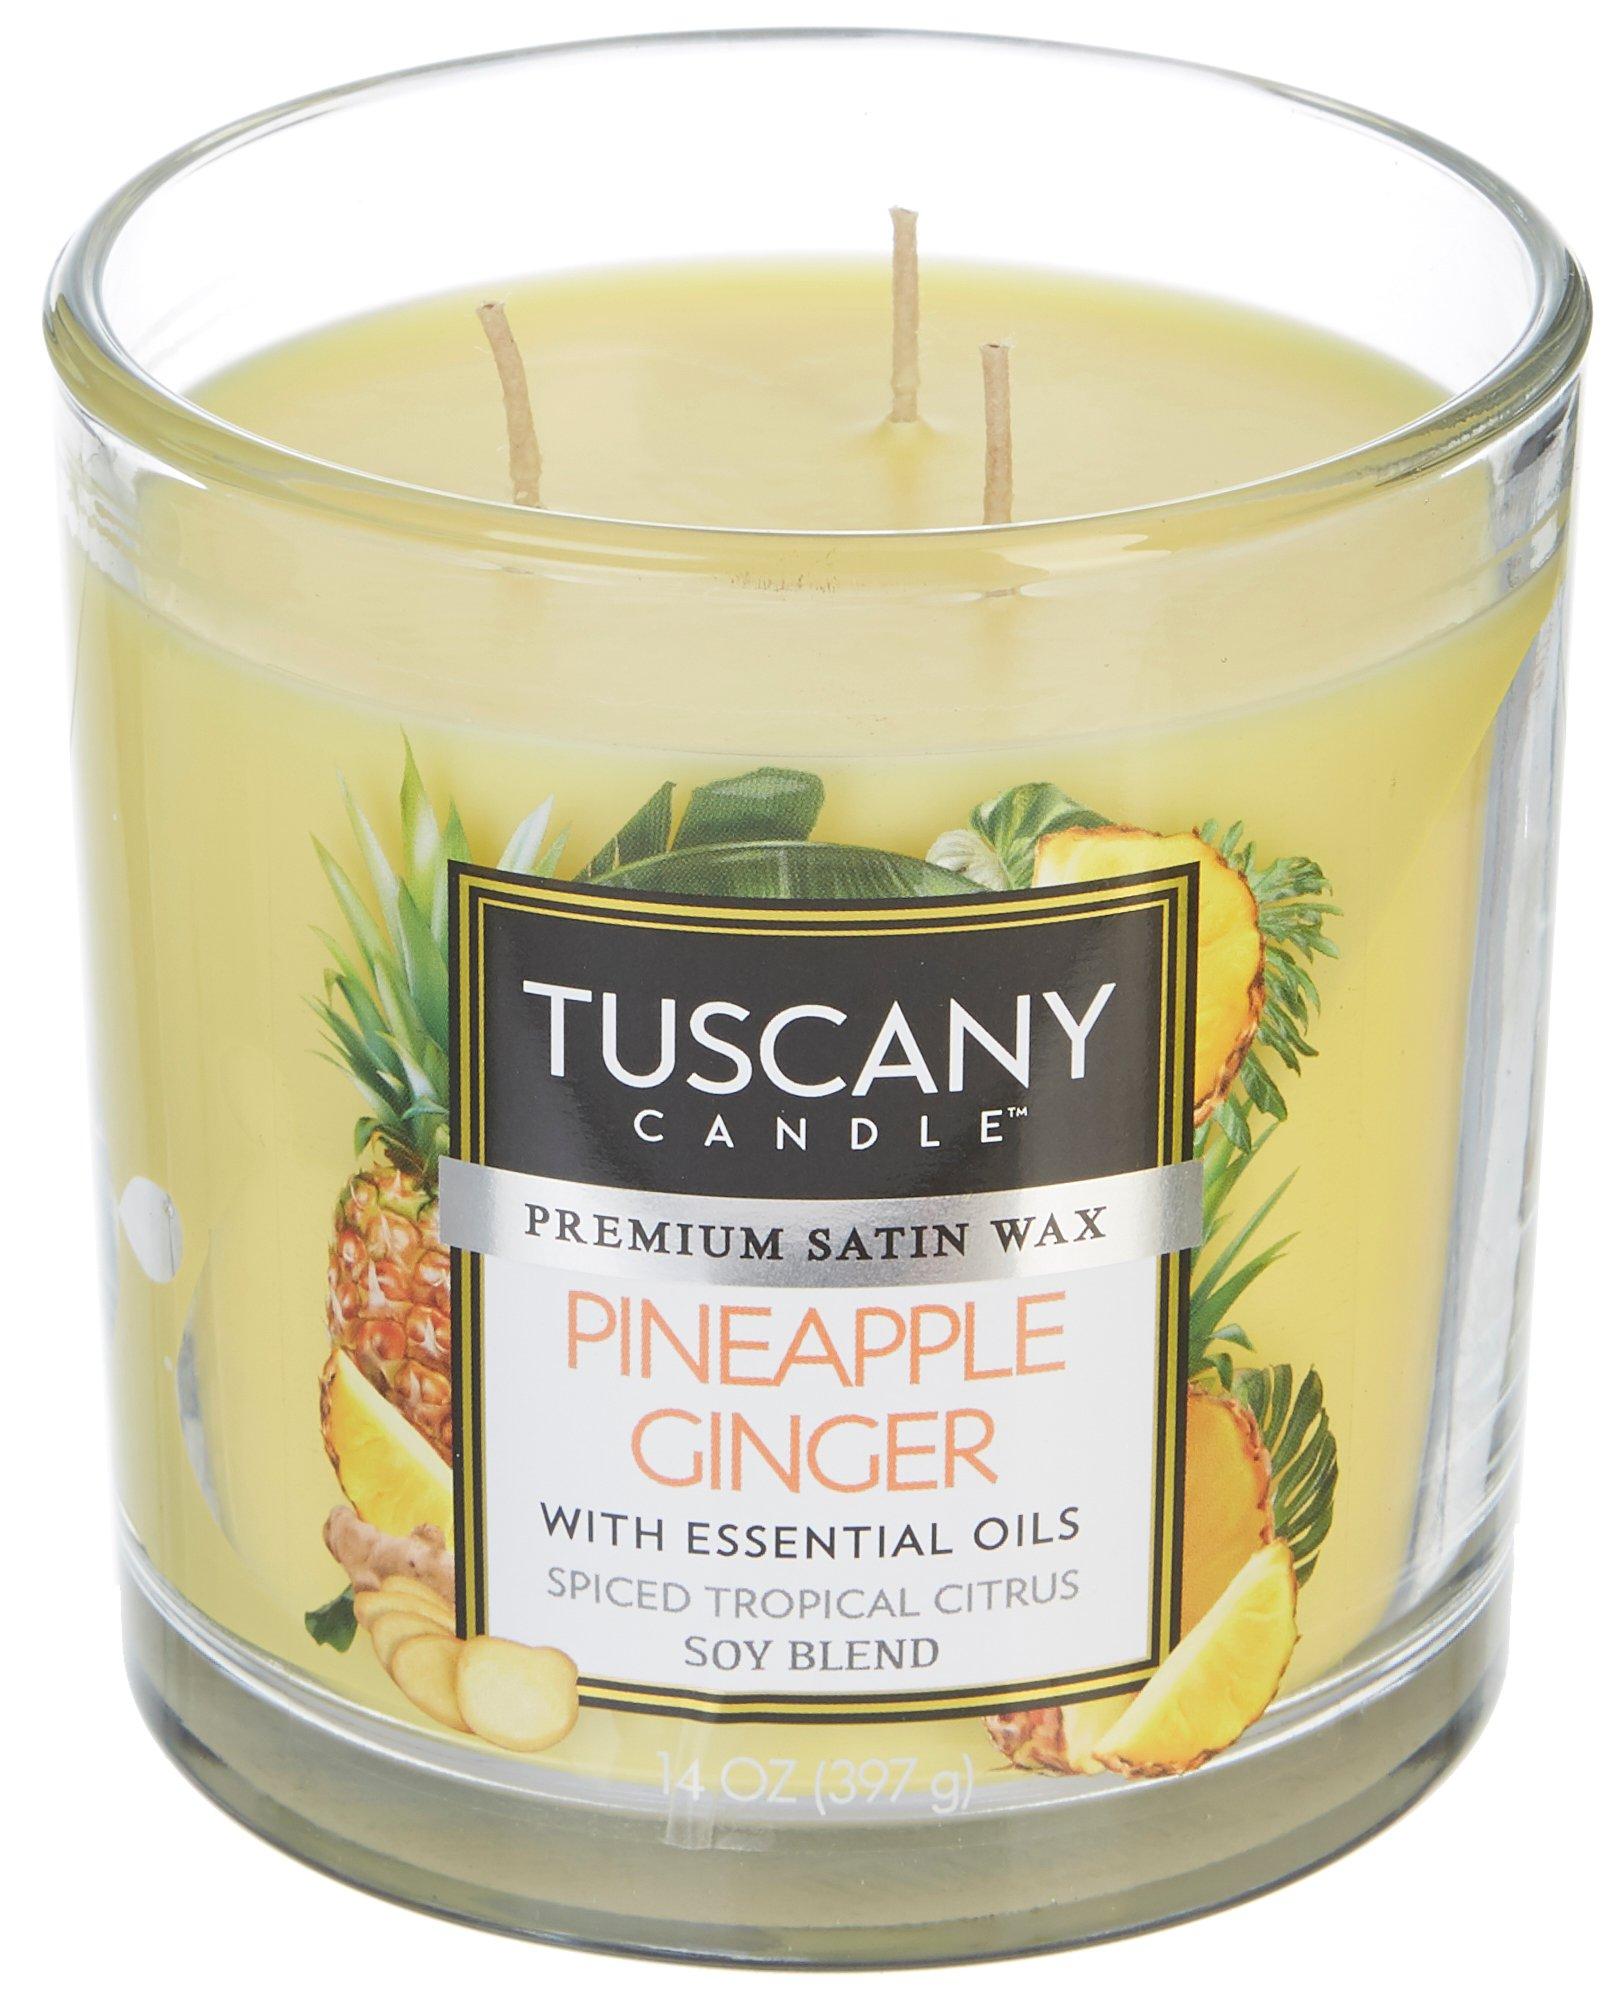 Tuscany 14 oz. Pineapple Ginger Soy Blend Jar Candle